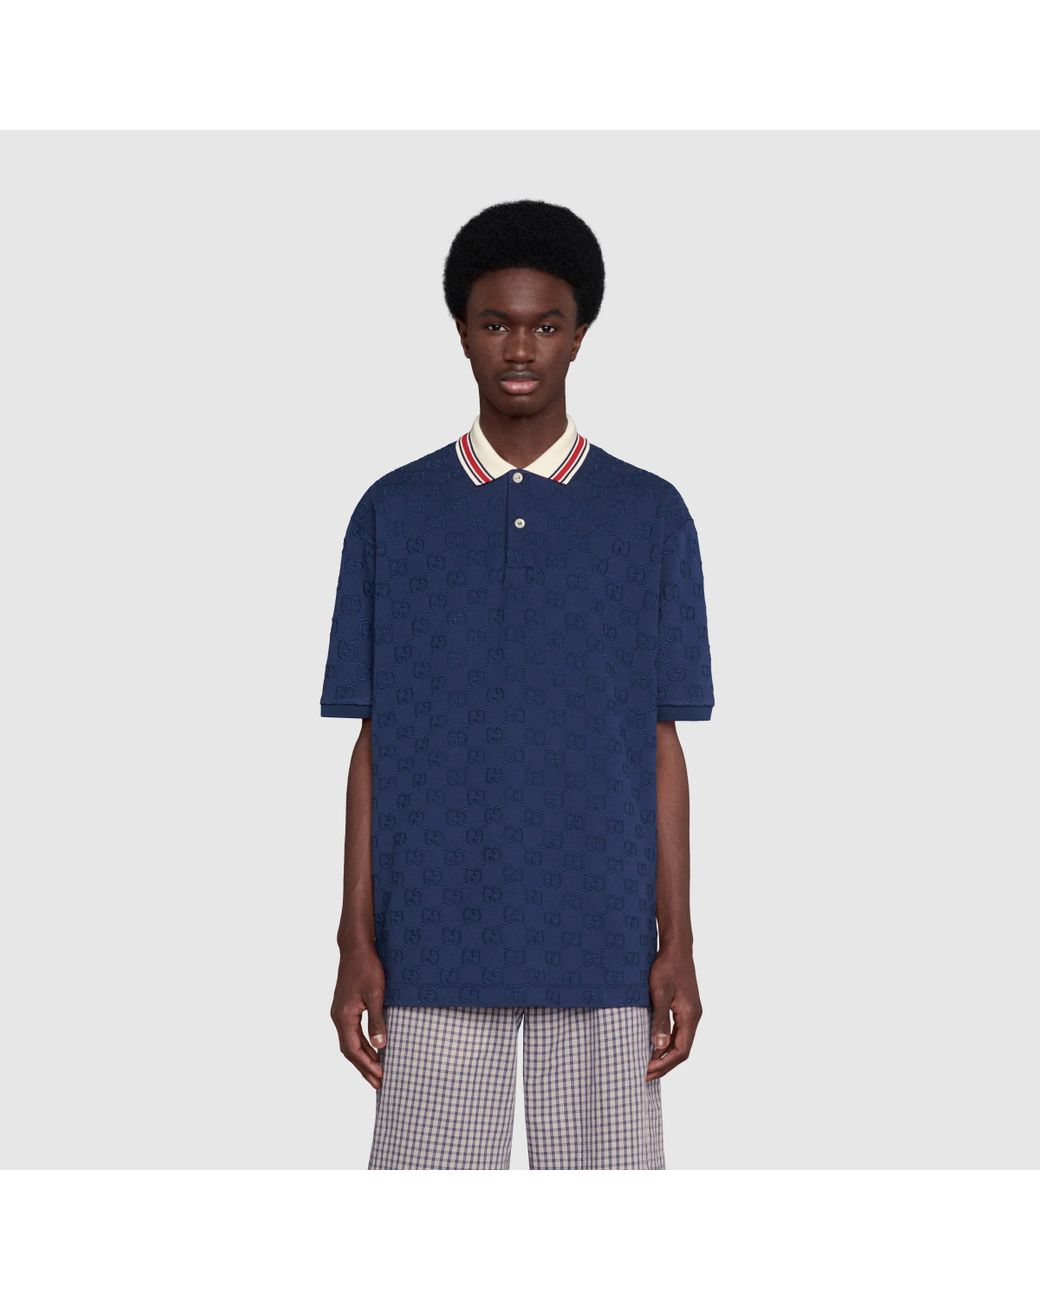 Gucci Navy Blue and White Monogram Jacquard Knit Polo T-Shirt L Gucci